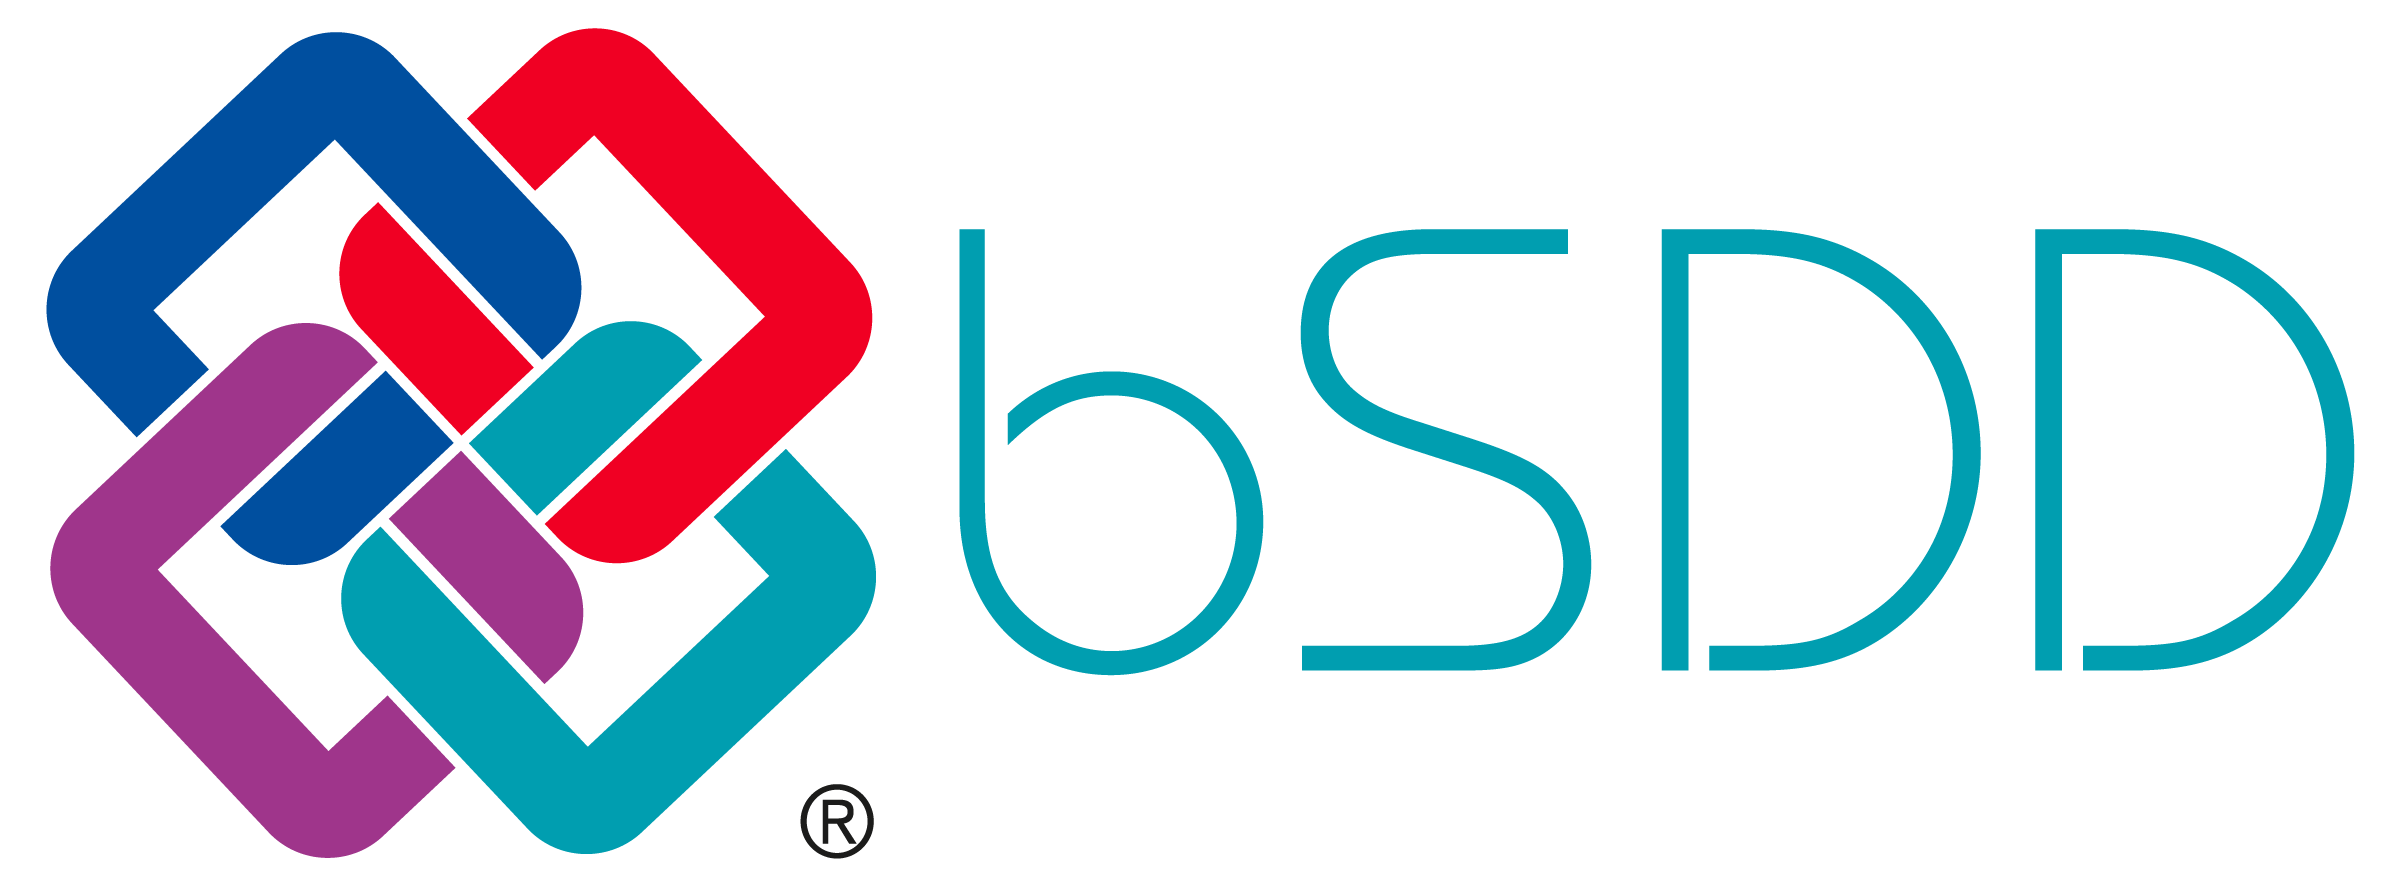 bSDD logo